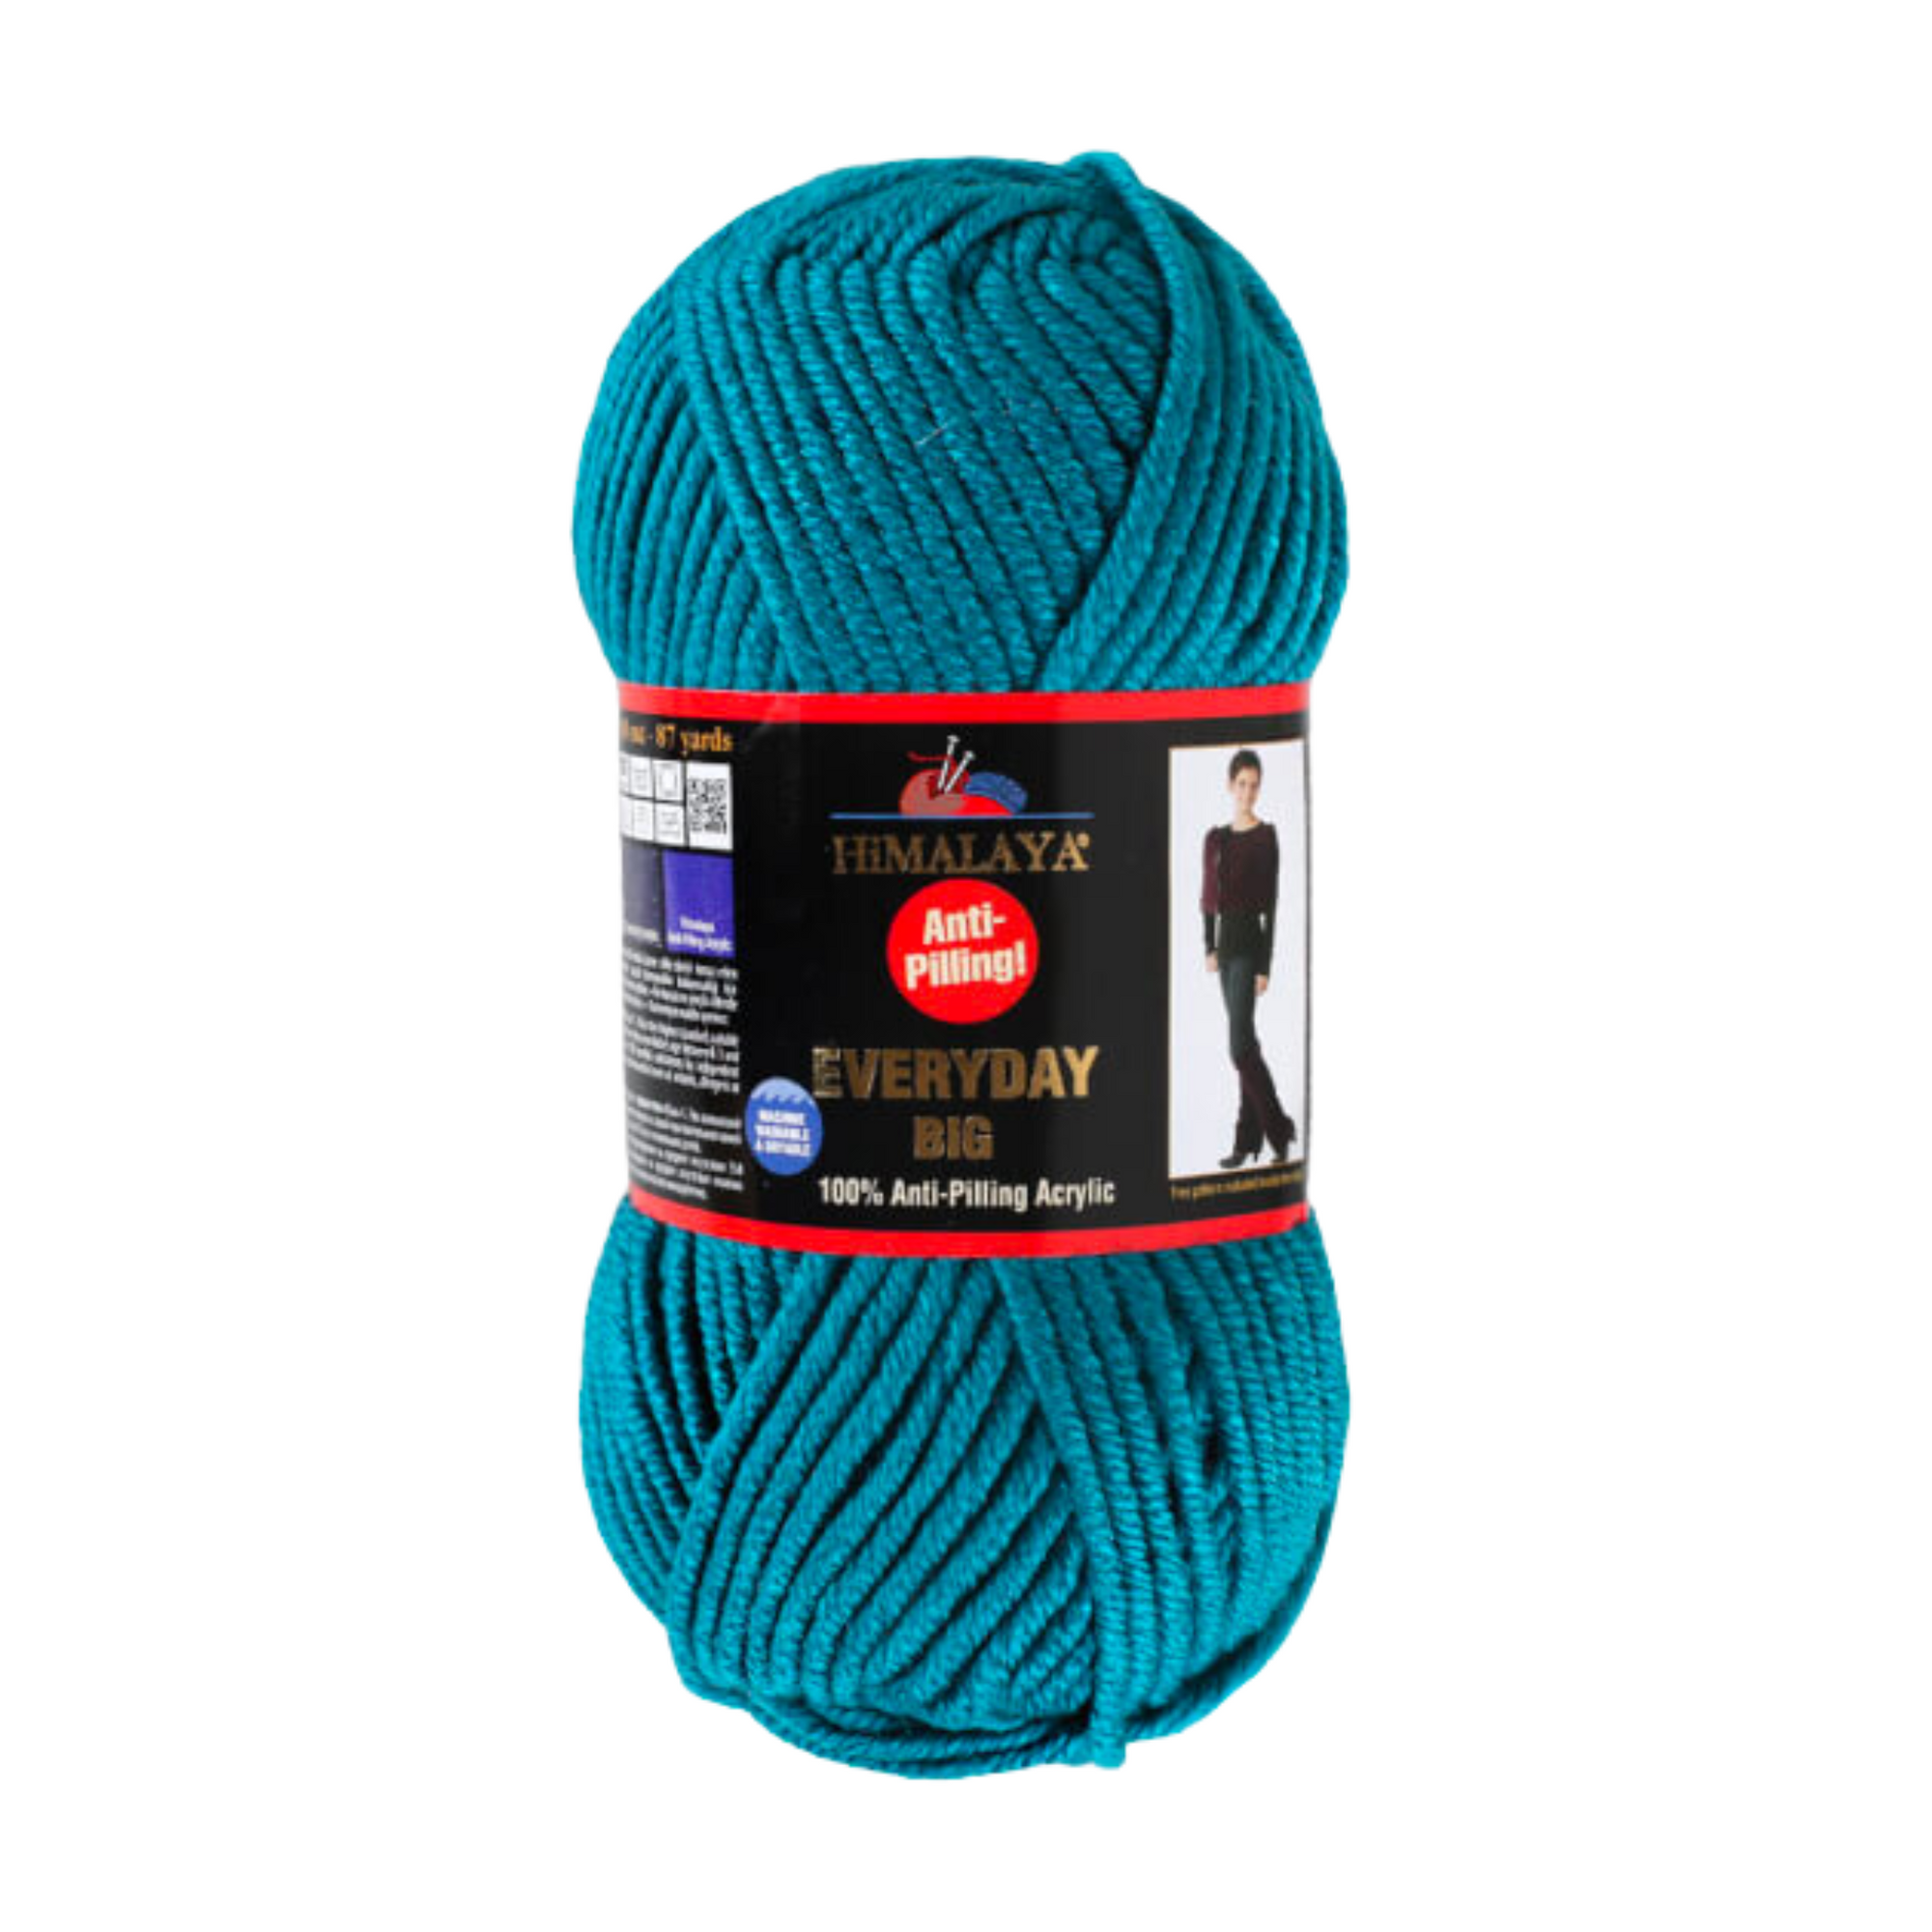 Himalaya Everyday 100% Anti-Pilling Acrylic Yarn, Green - 70826